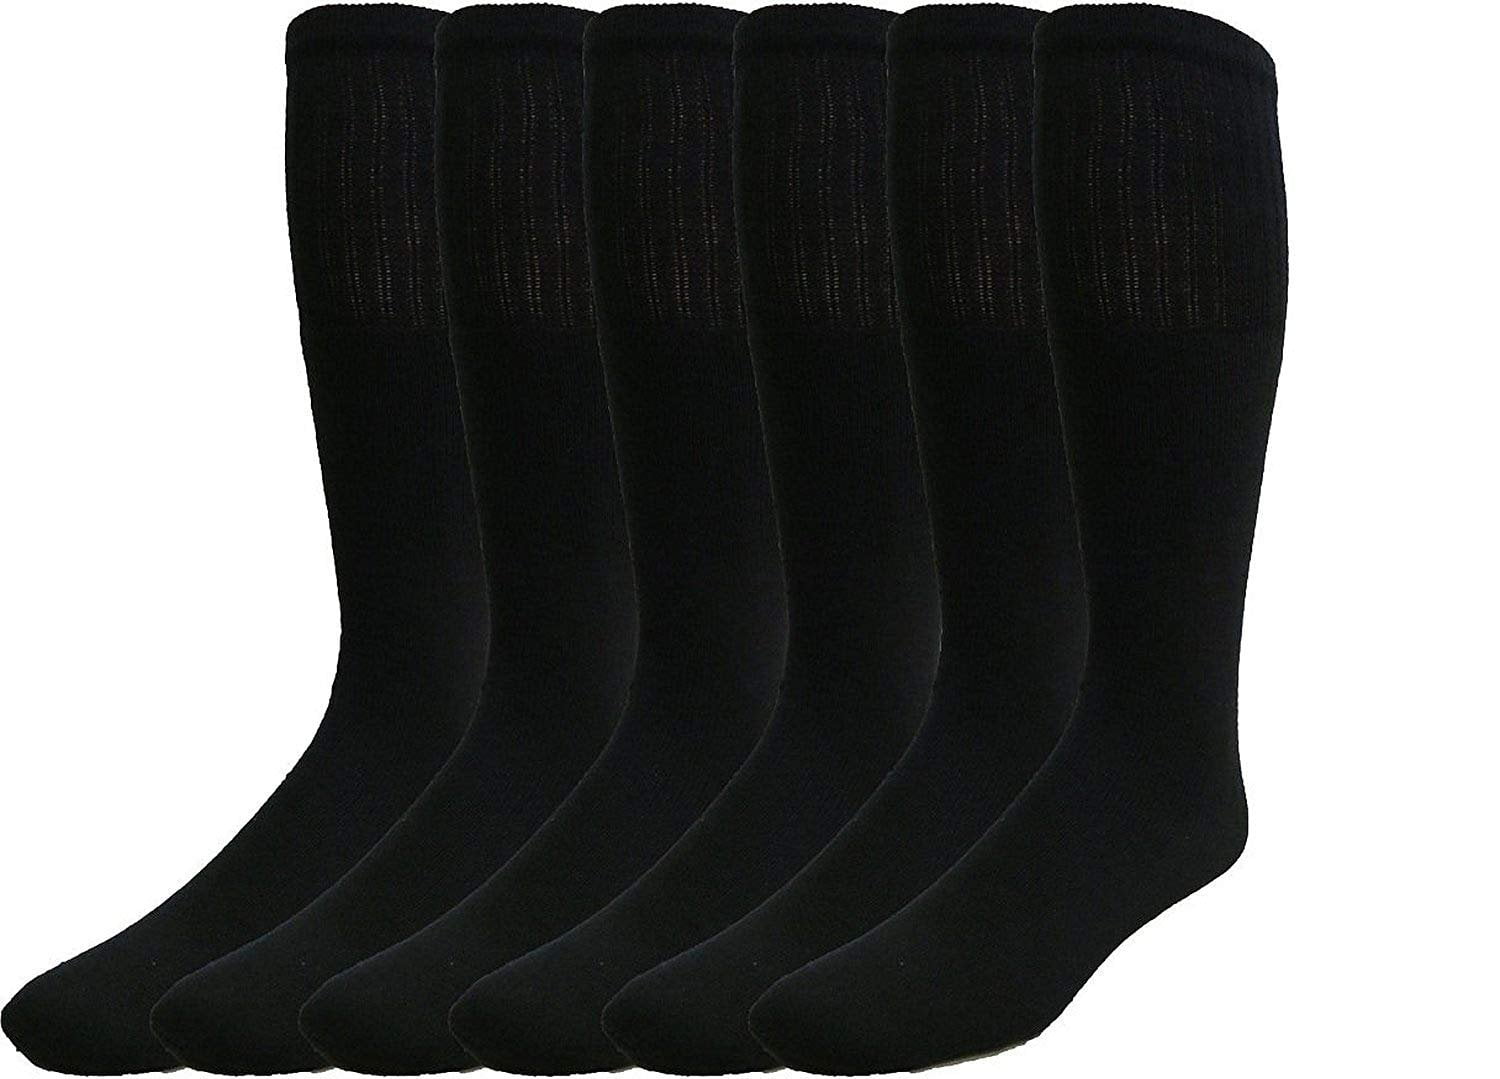 SOCKS'NBULK - SOCKS'NBULK 12 Pairs of Men's Extra Long Tube Socks ...